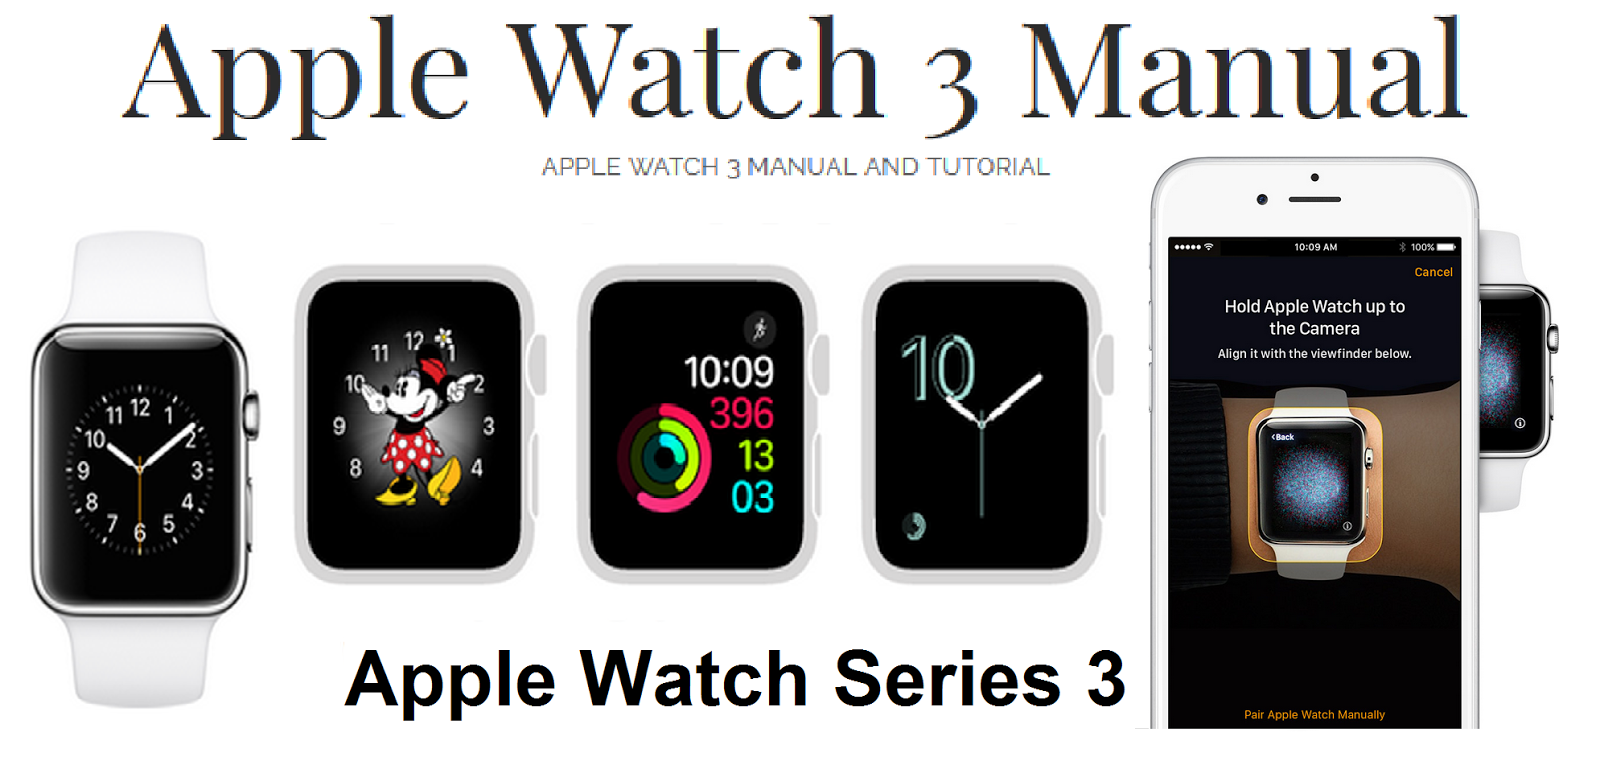 Apple Watch Series 3 Tutorial | Apple Watch 3 Manual